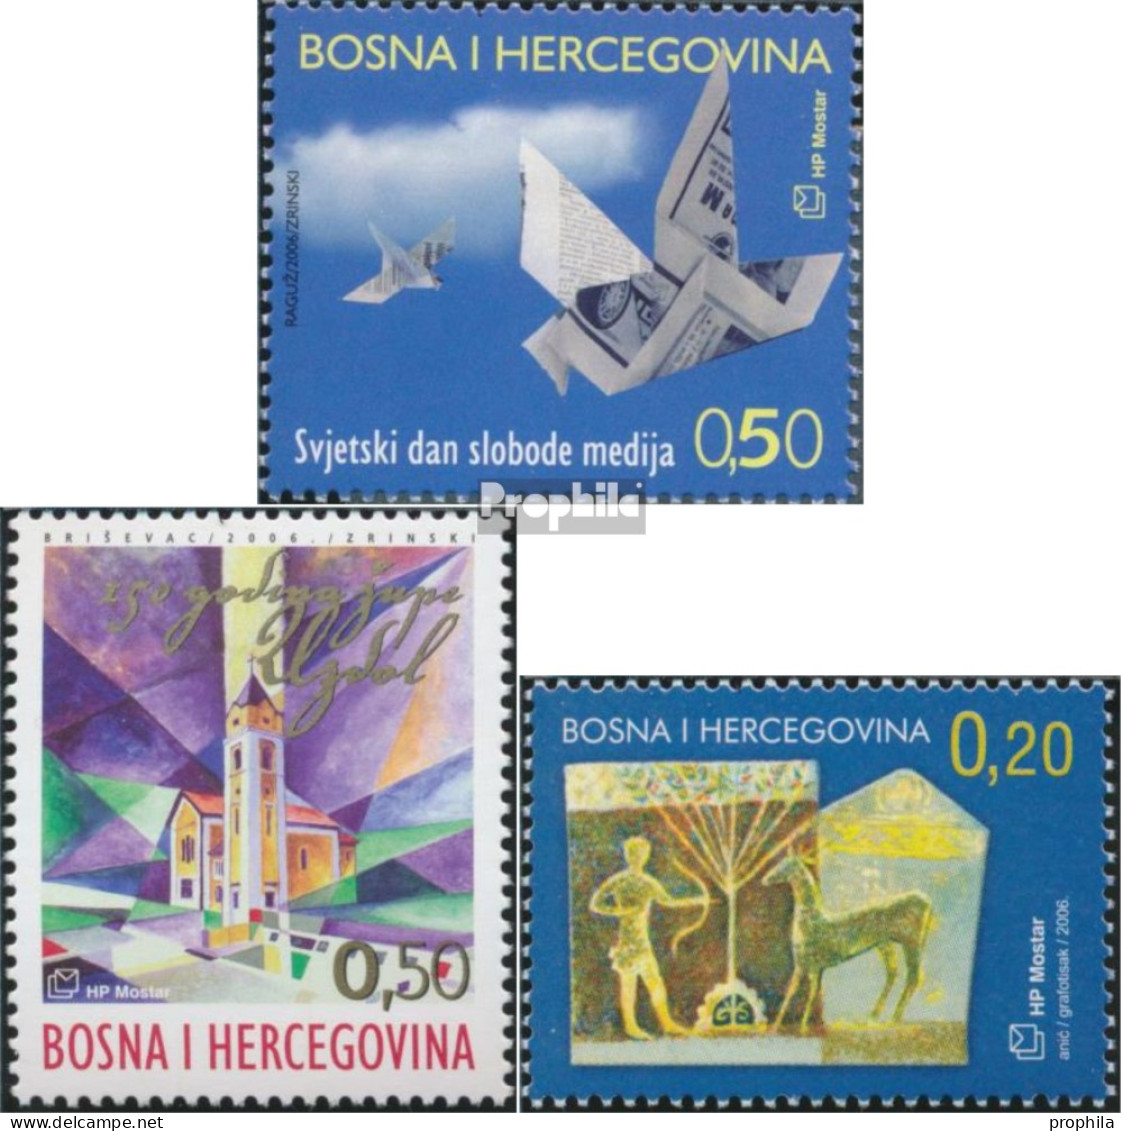 Bosnien - Kroat. Post Mostar 174,181,183 (kompl.Ausg.) Postfrisch 2006 Medienfreiheit, Uzdol, Archäologie - Bosnia And Herzegovina